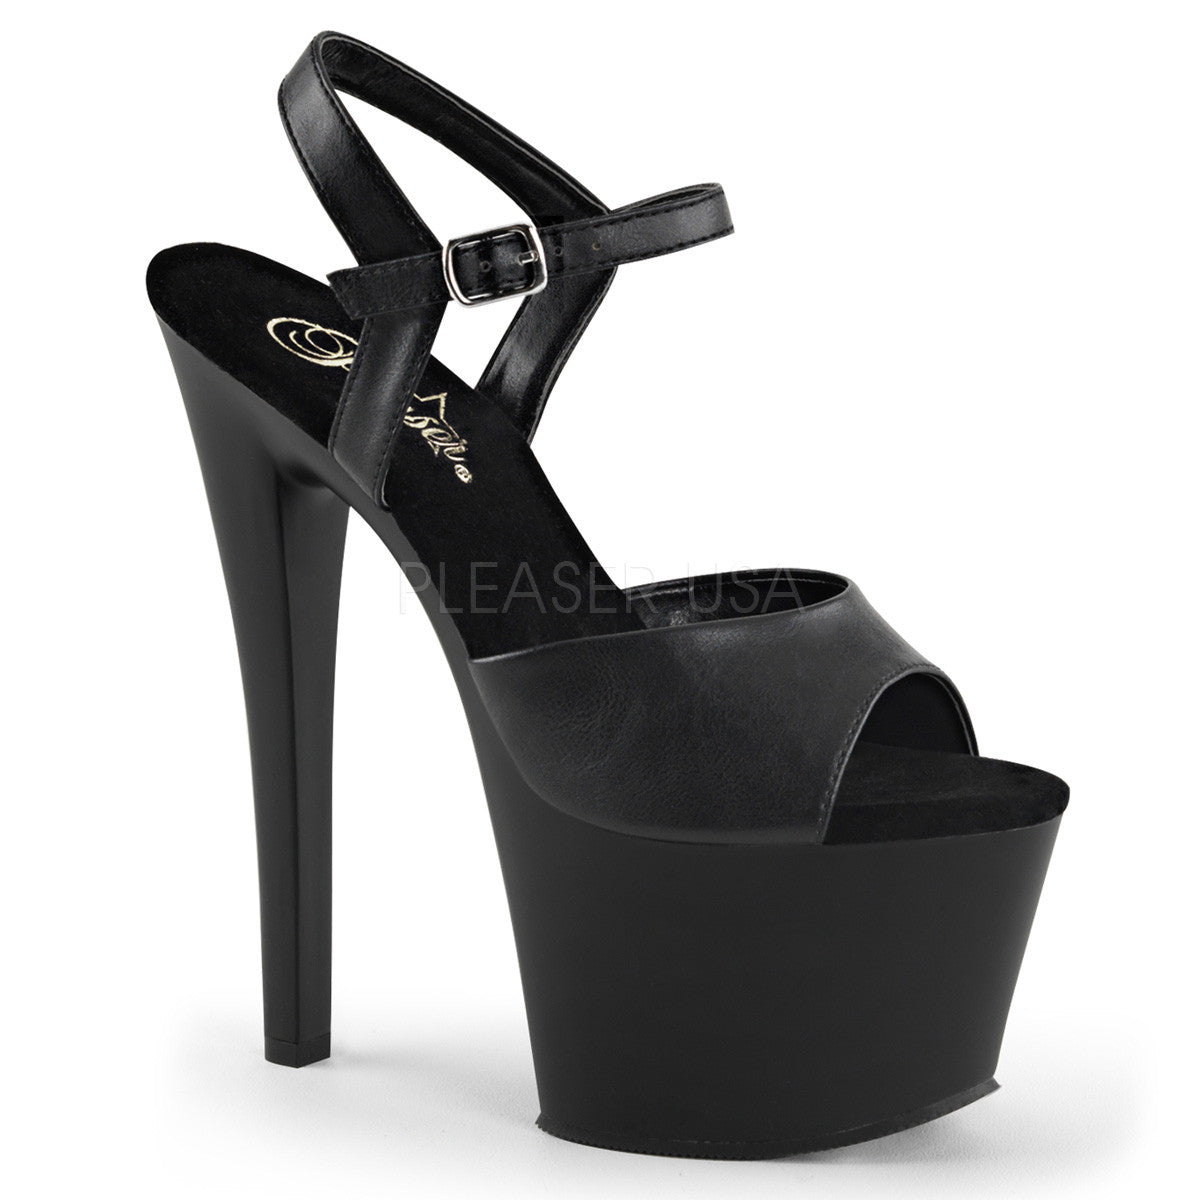 Pleaser SKY-309 Black Leather Sandals - Shoecup.com